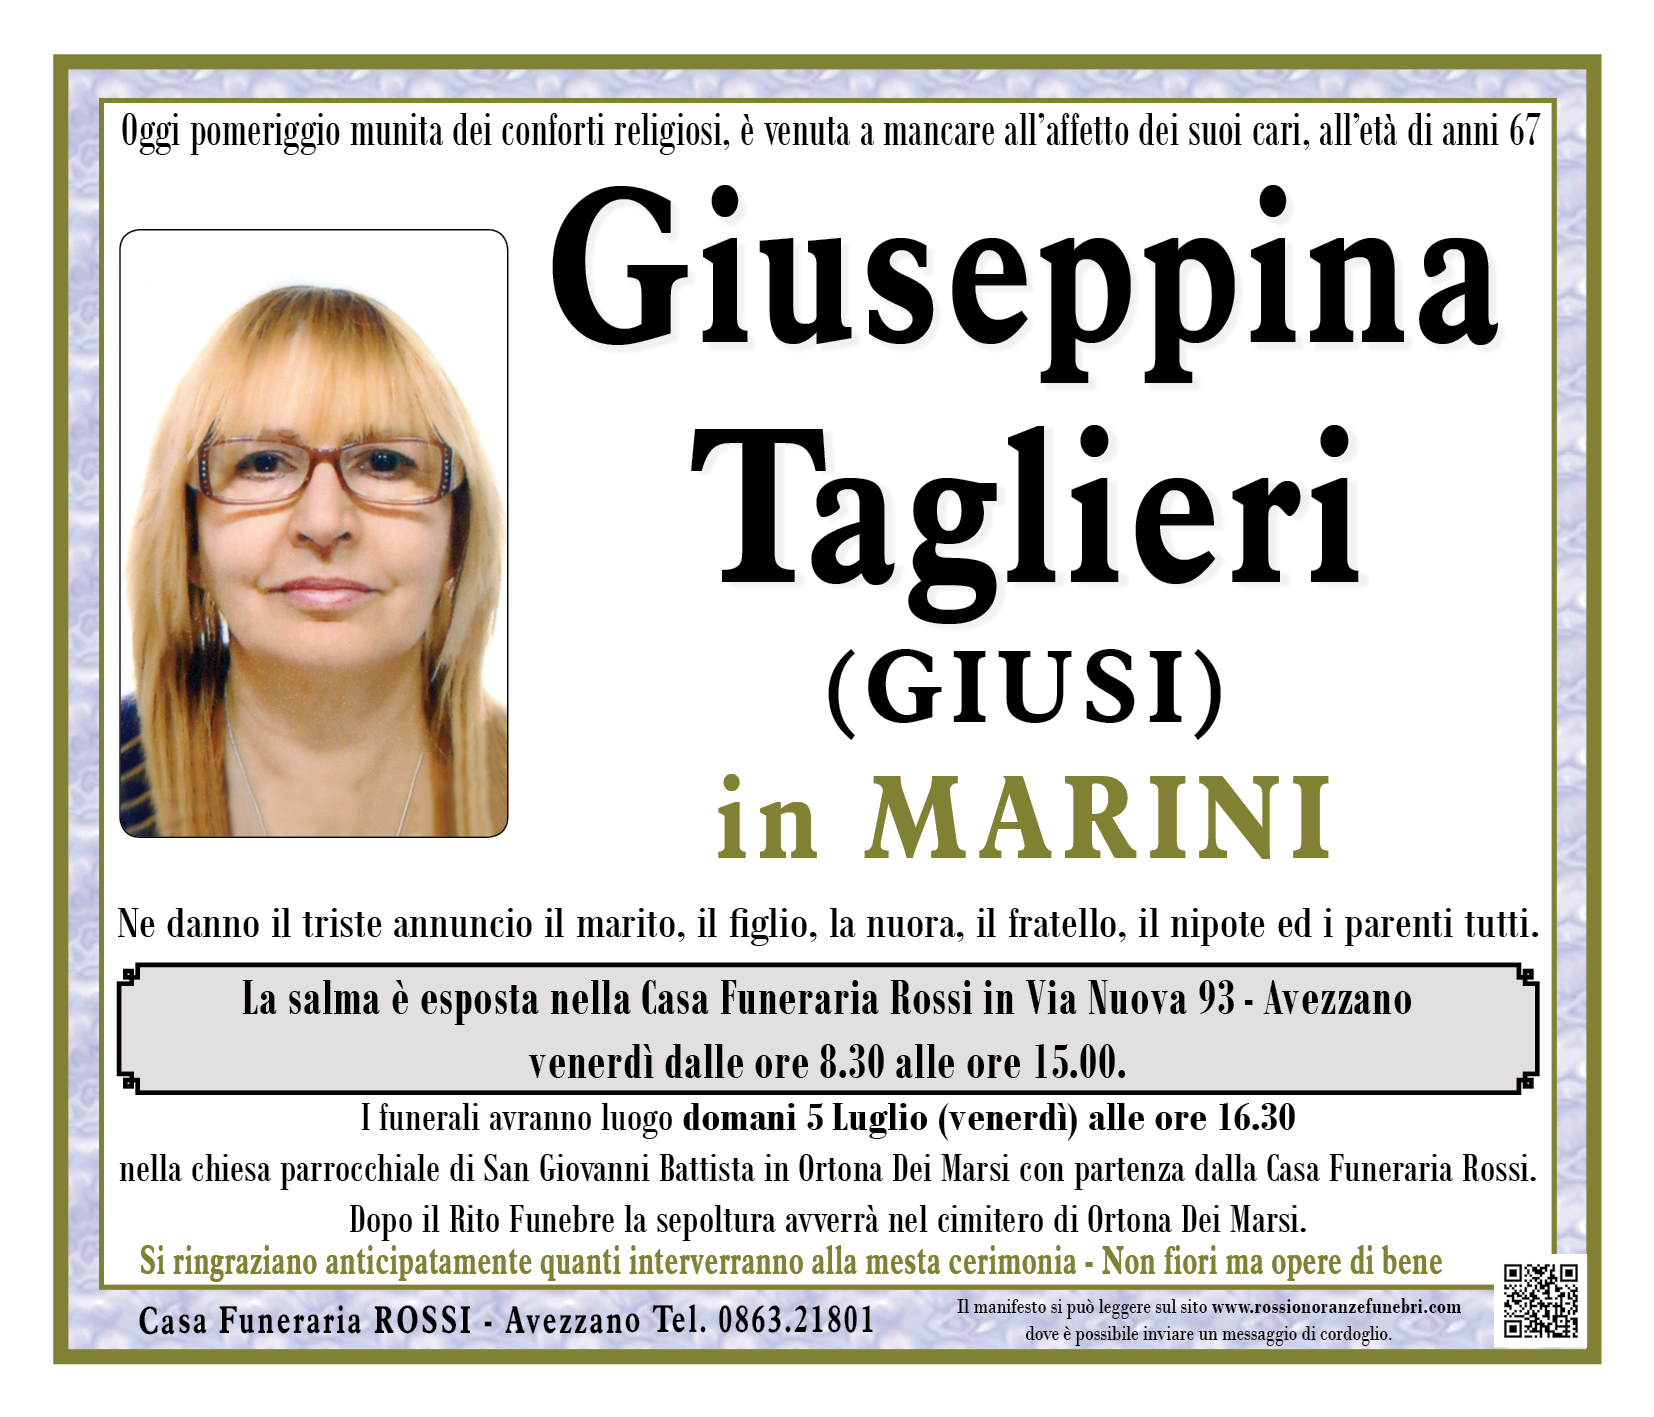 Giuseppina Taglieri